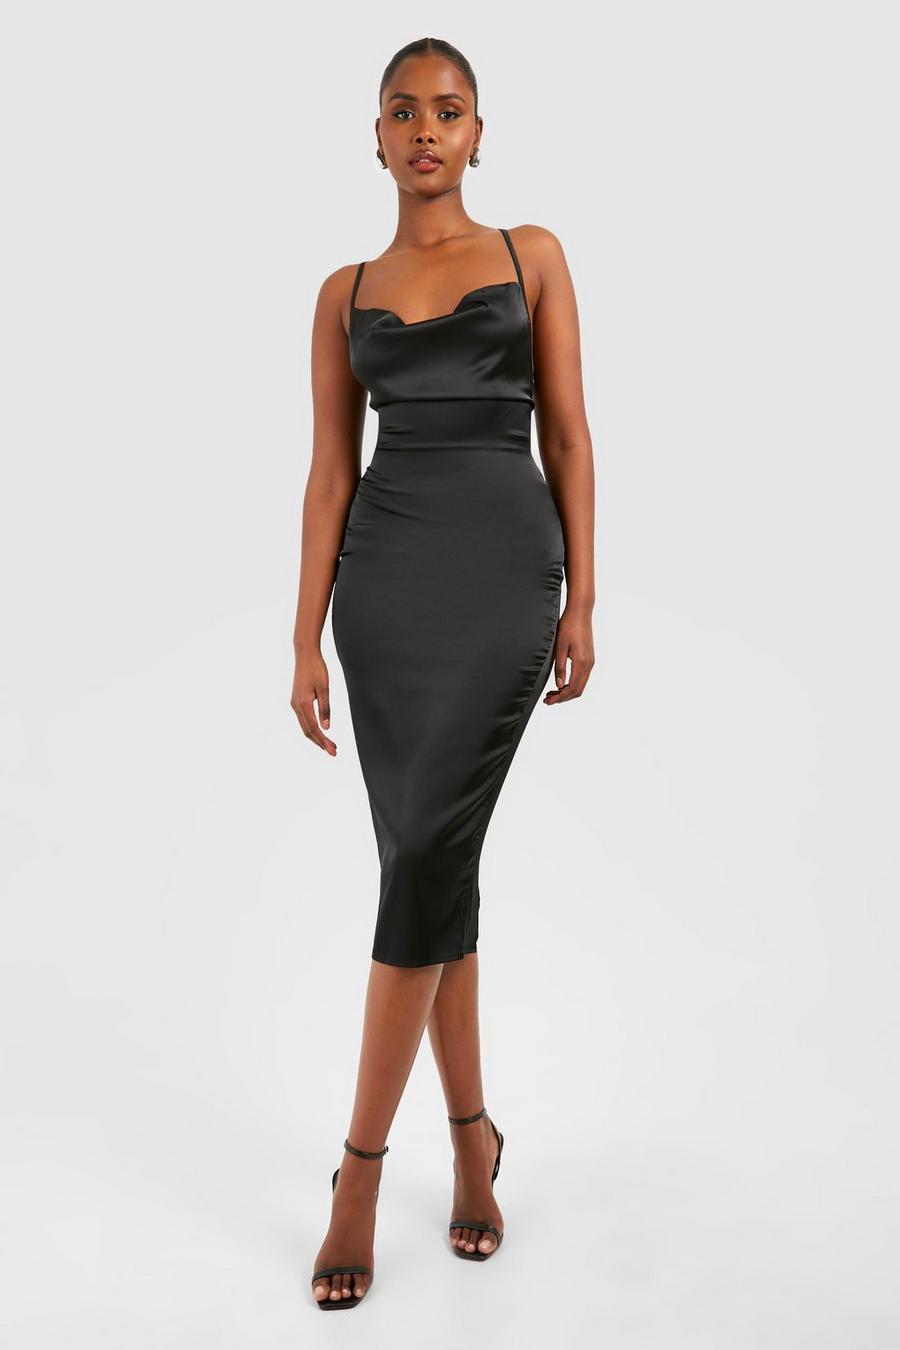 Cowl Neck Dress - Taupe Dress - Bodycon Dress - $44.00 - Lulus